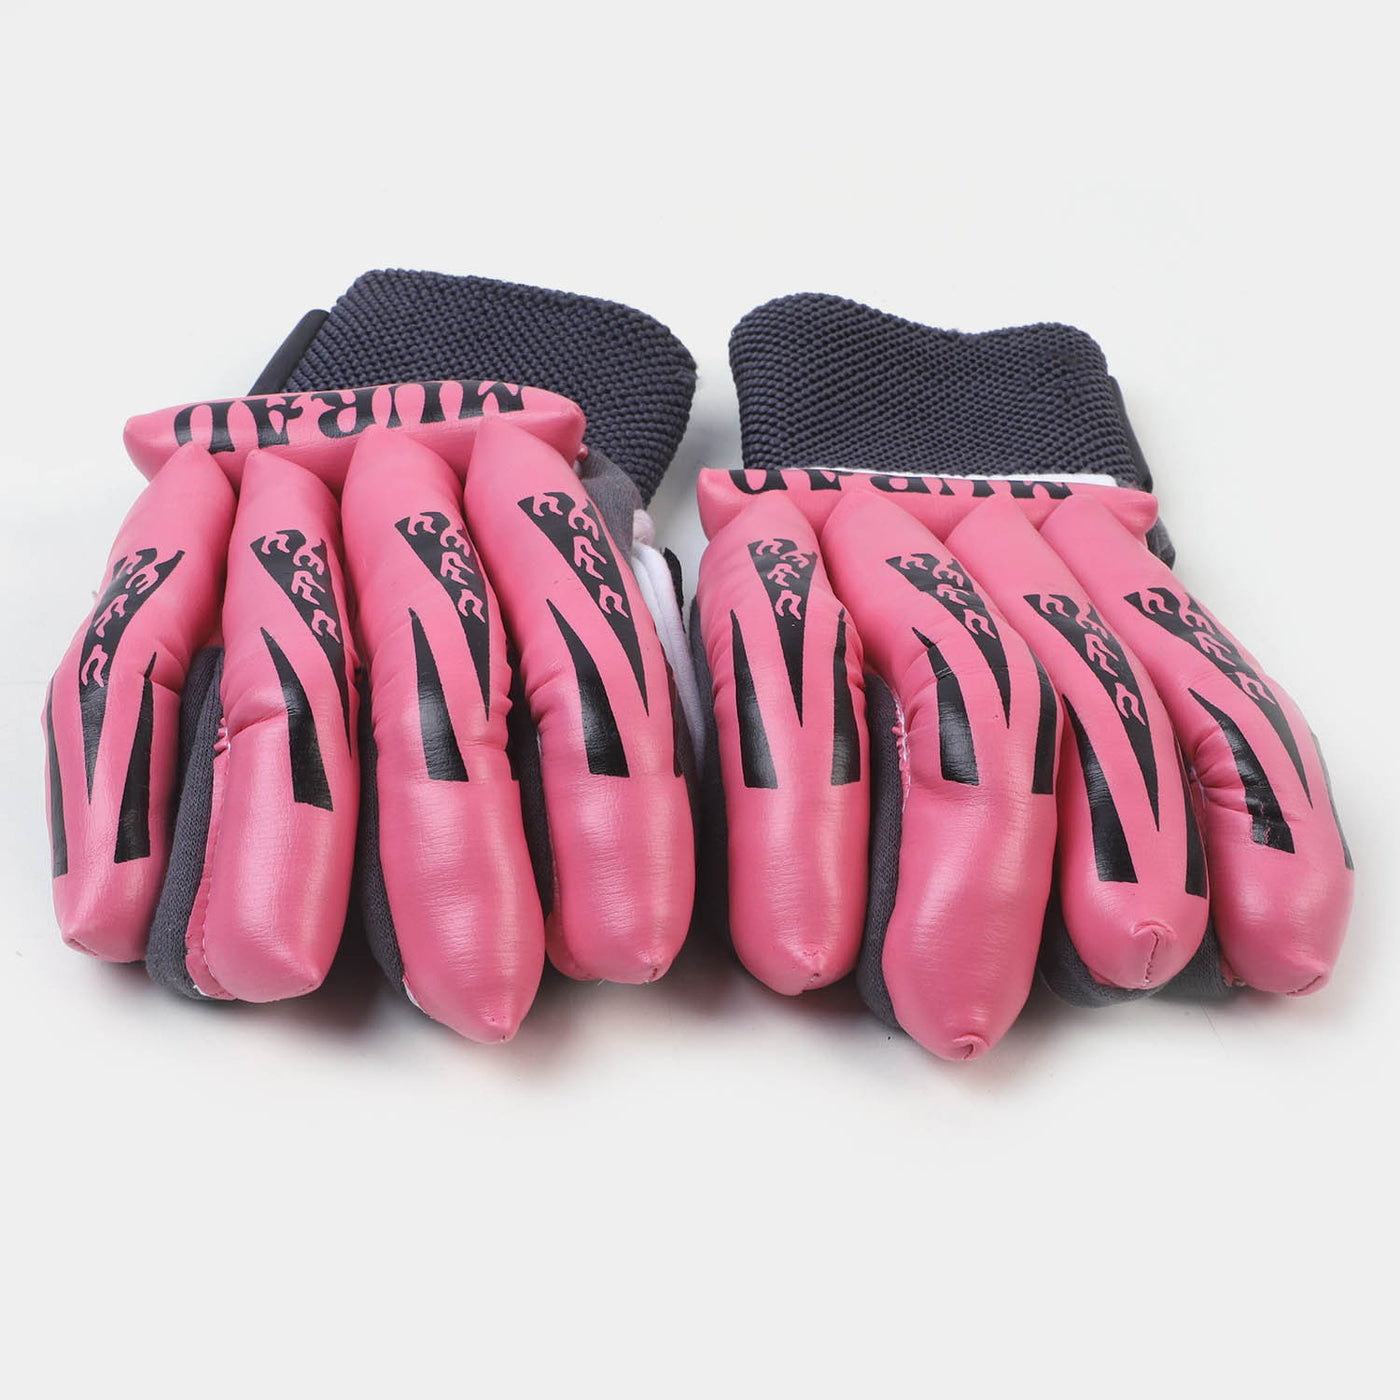 Cricket Gloves For Kids